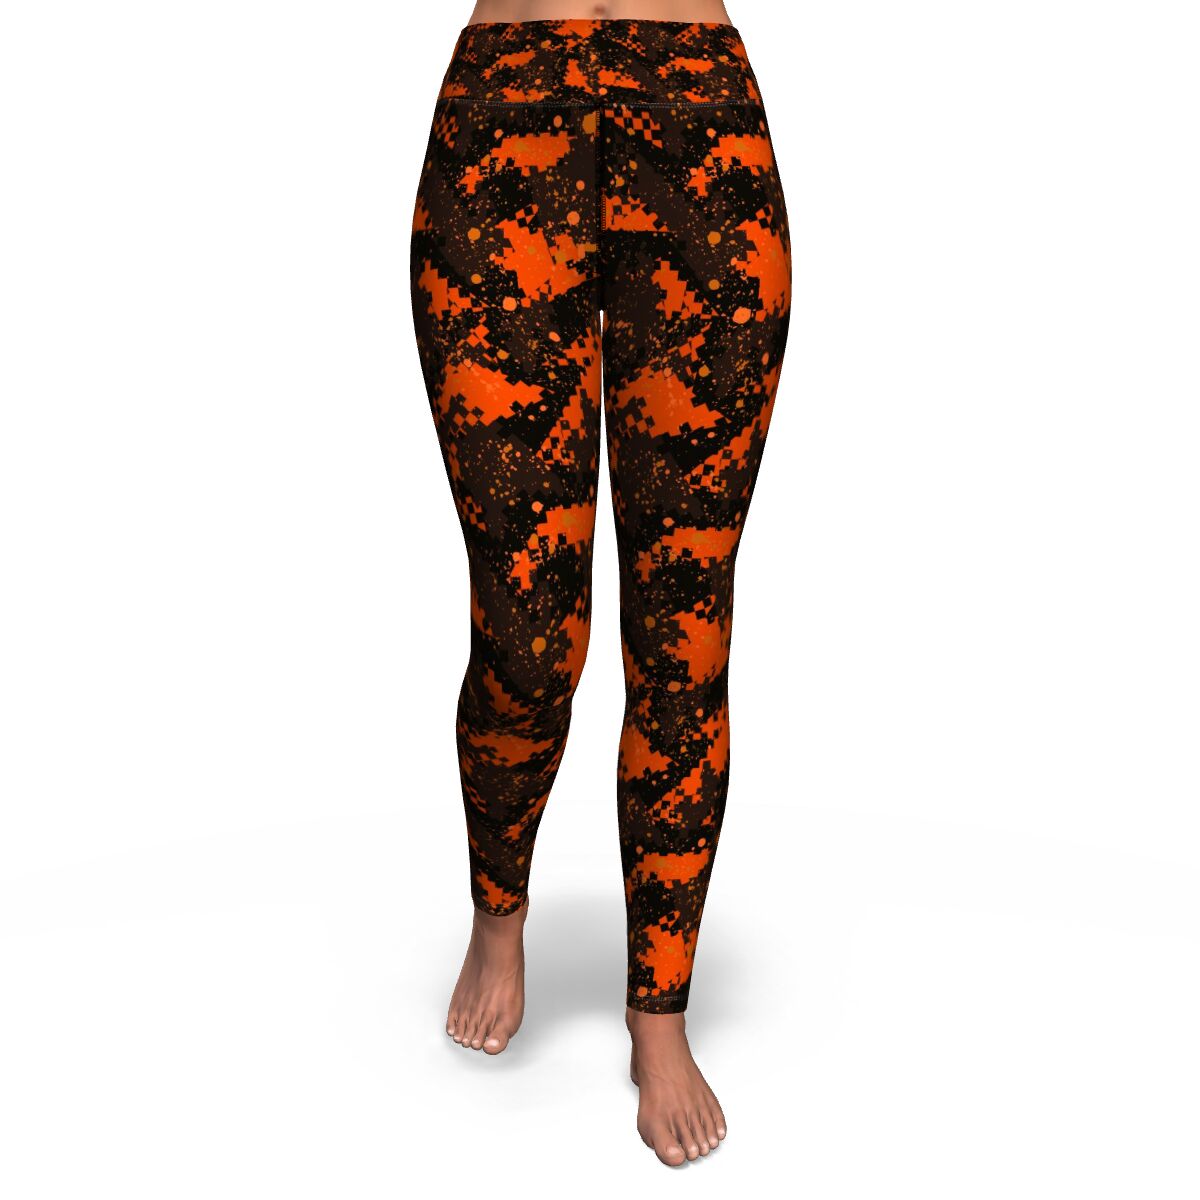 Women's Orange Digital Camouflage High-Waisted Yoga Leggings Front